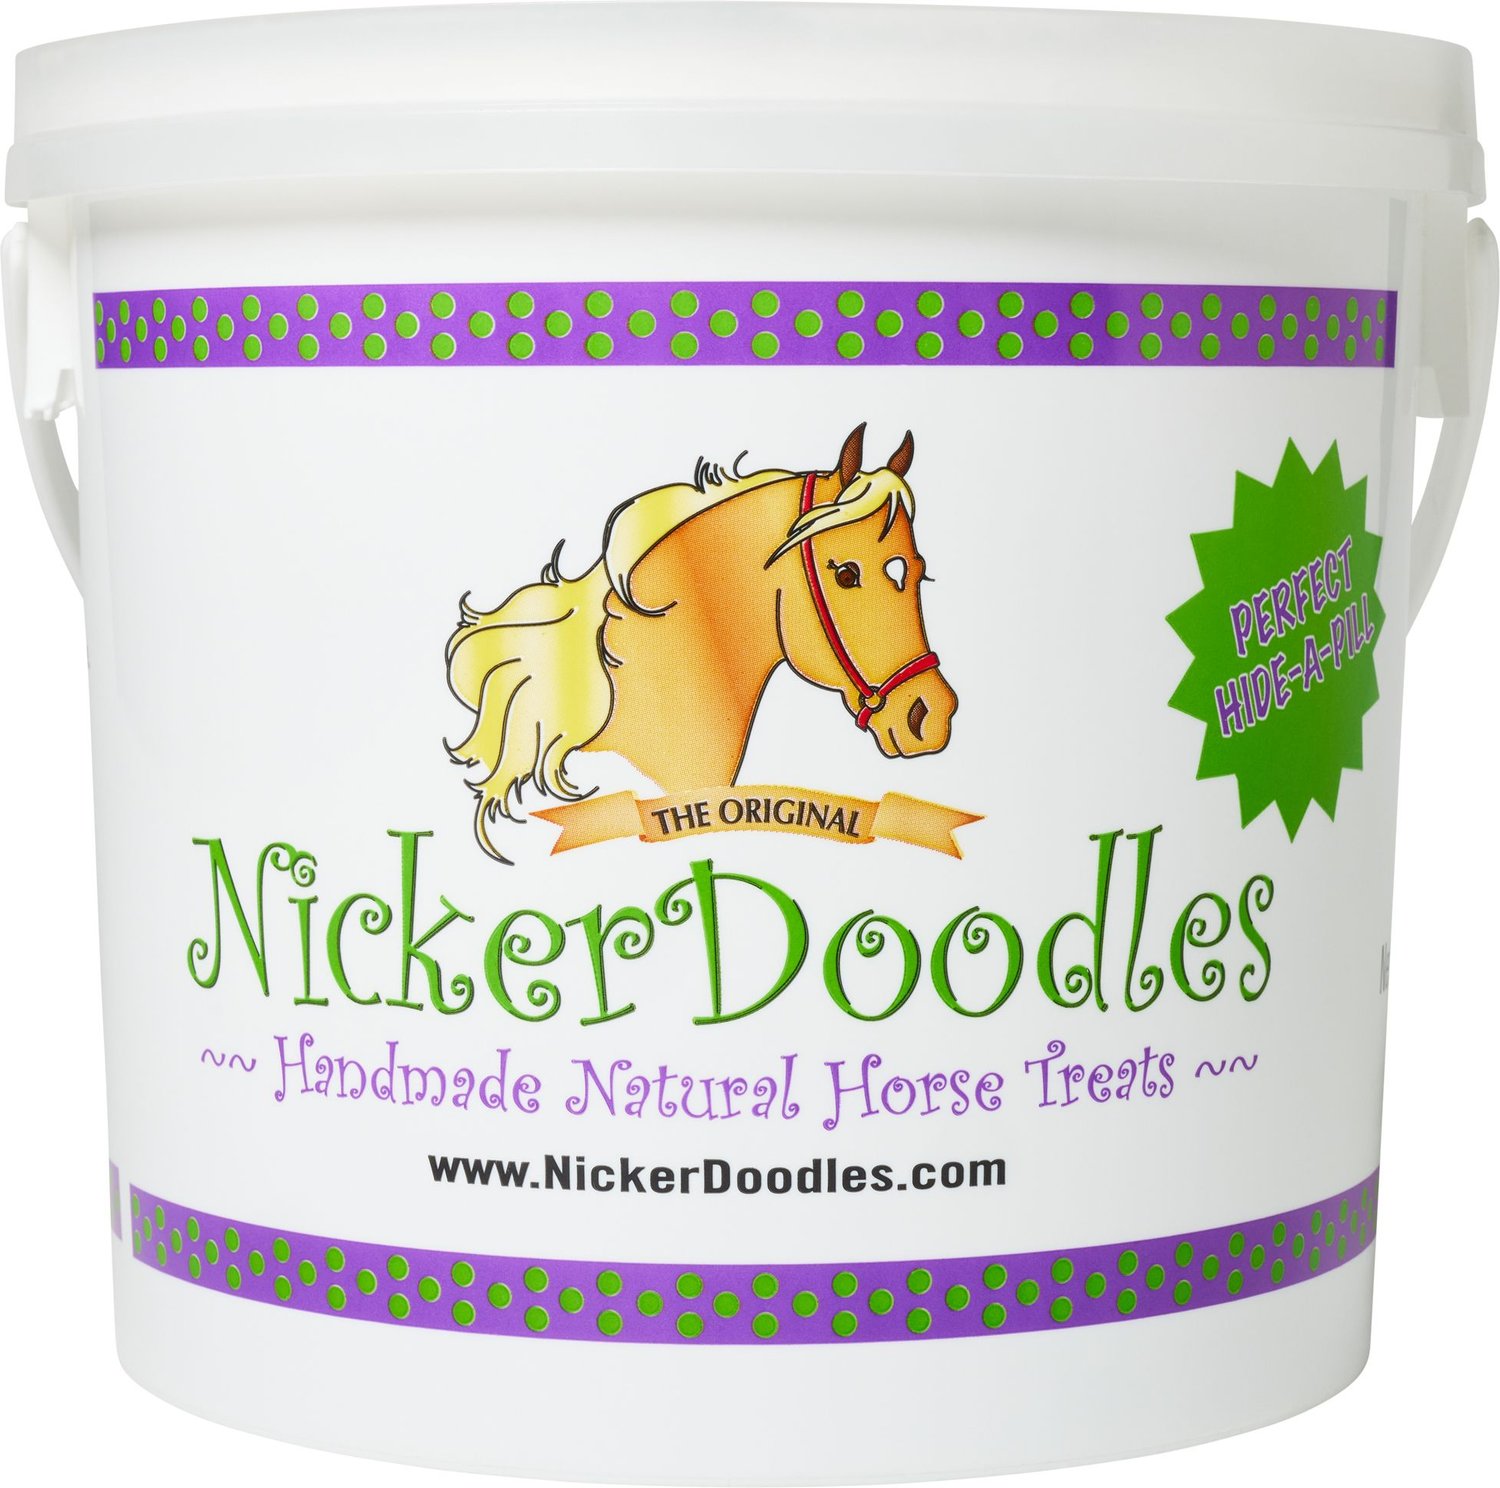 NickerDoodles The Original Handmade Natural Horse Treats